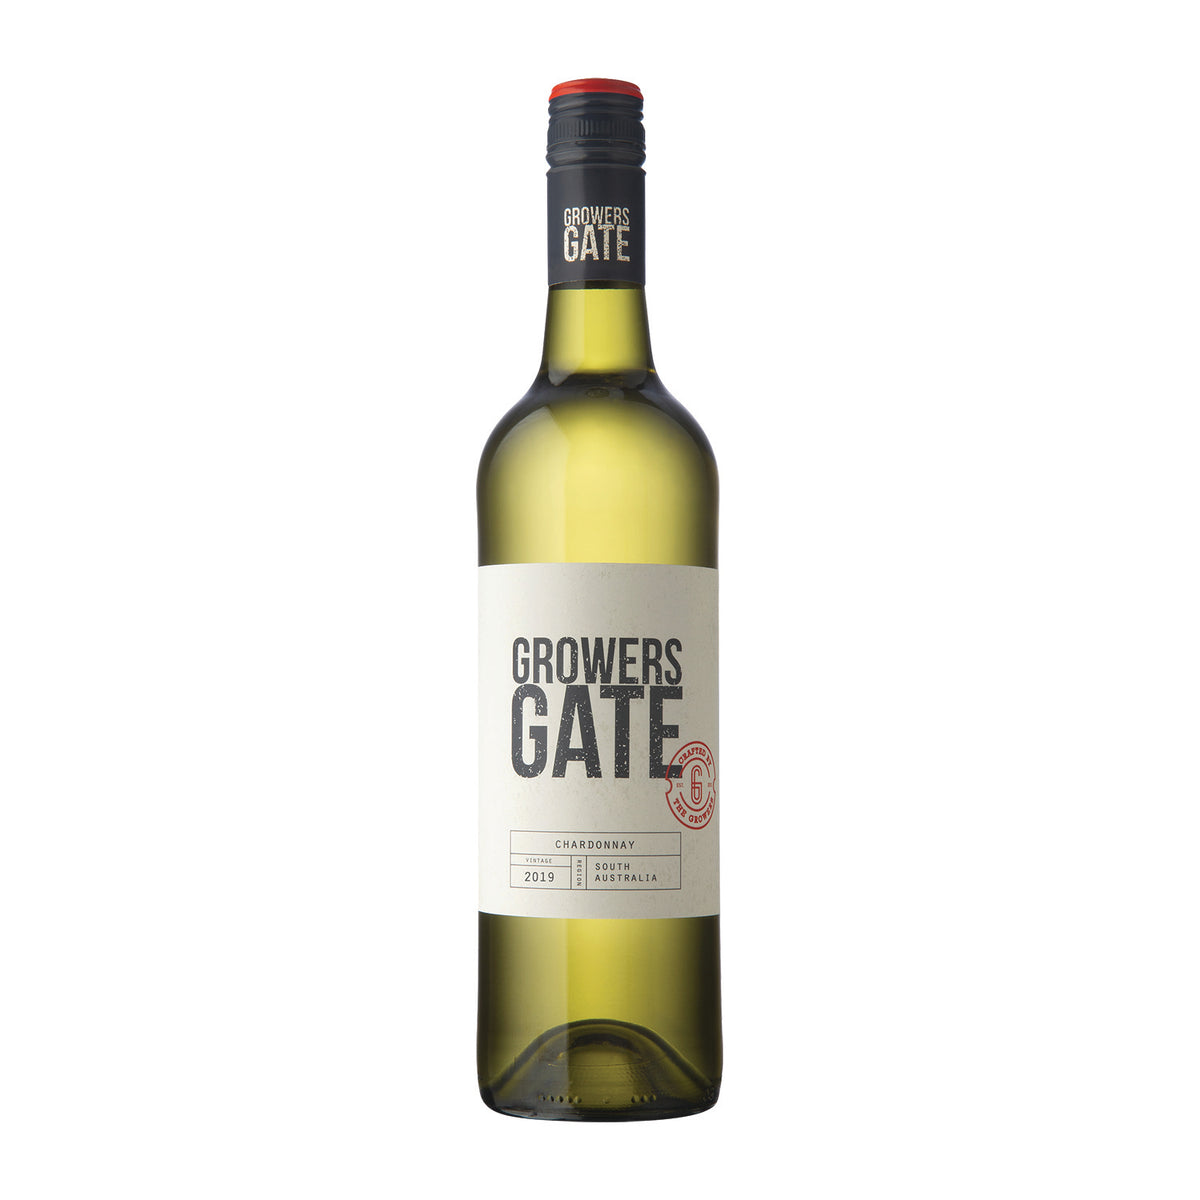 Growers Gate Chardonnay